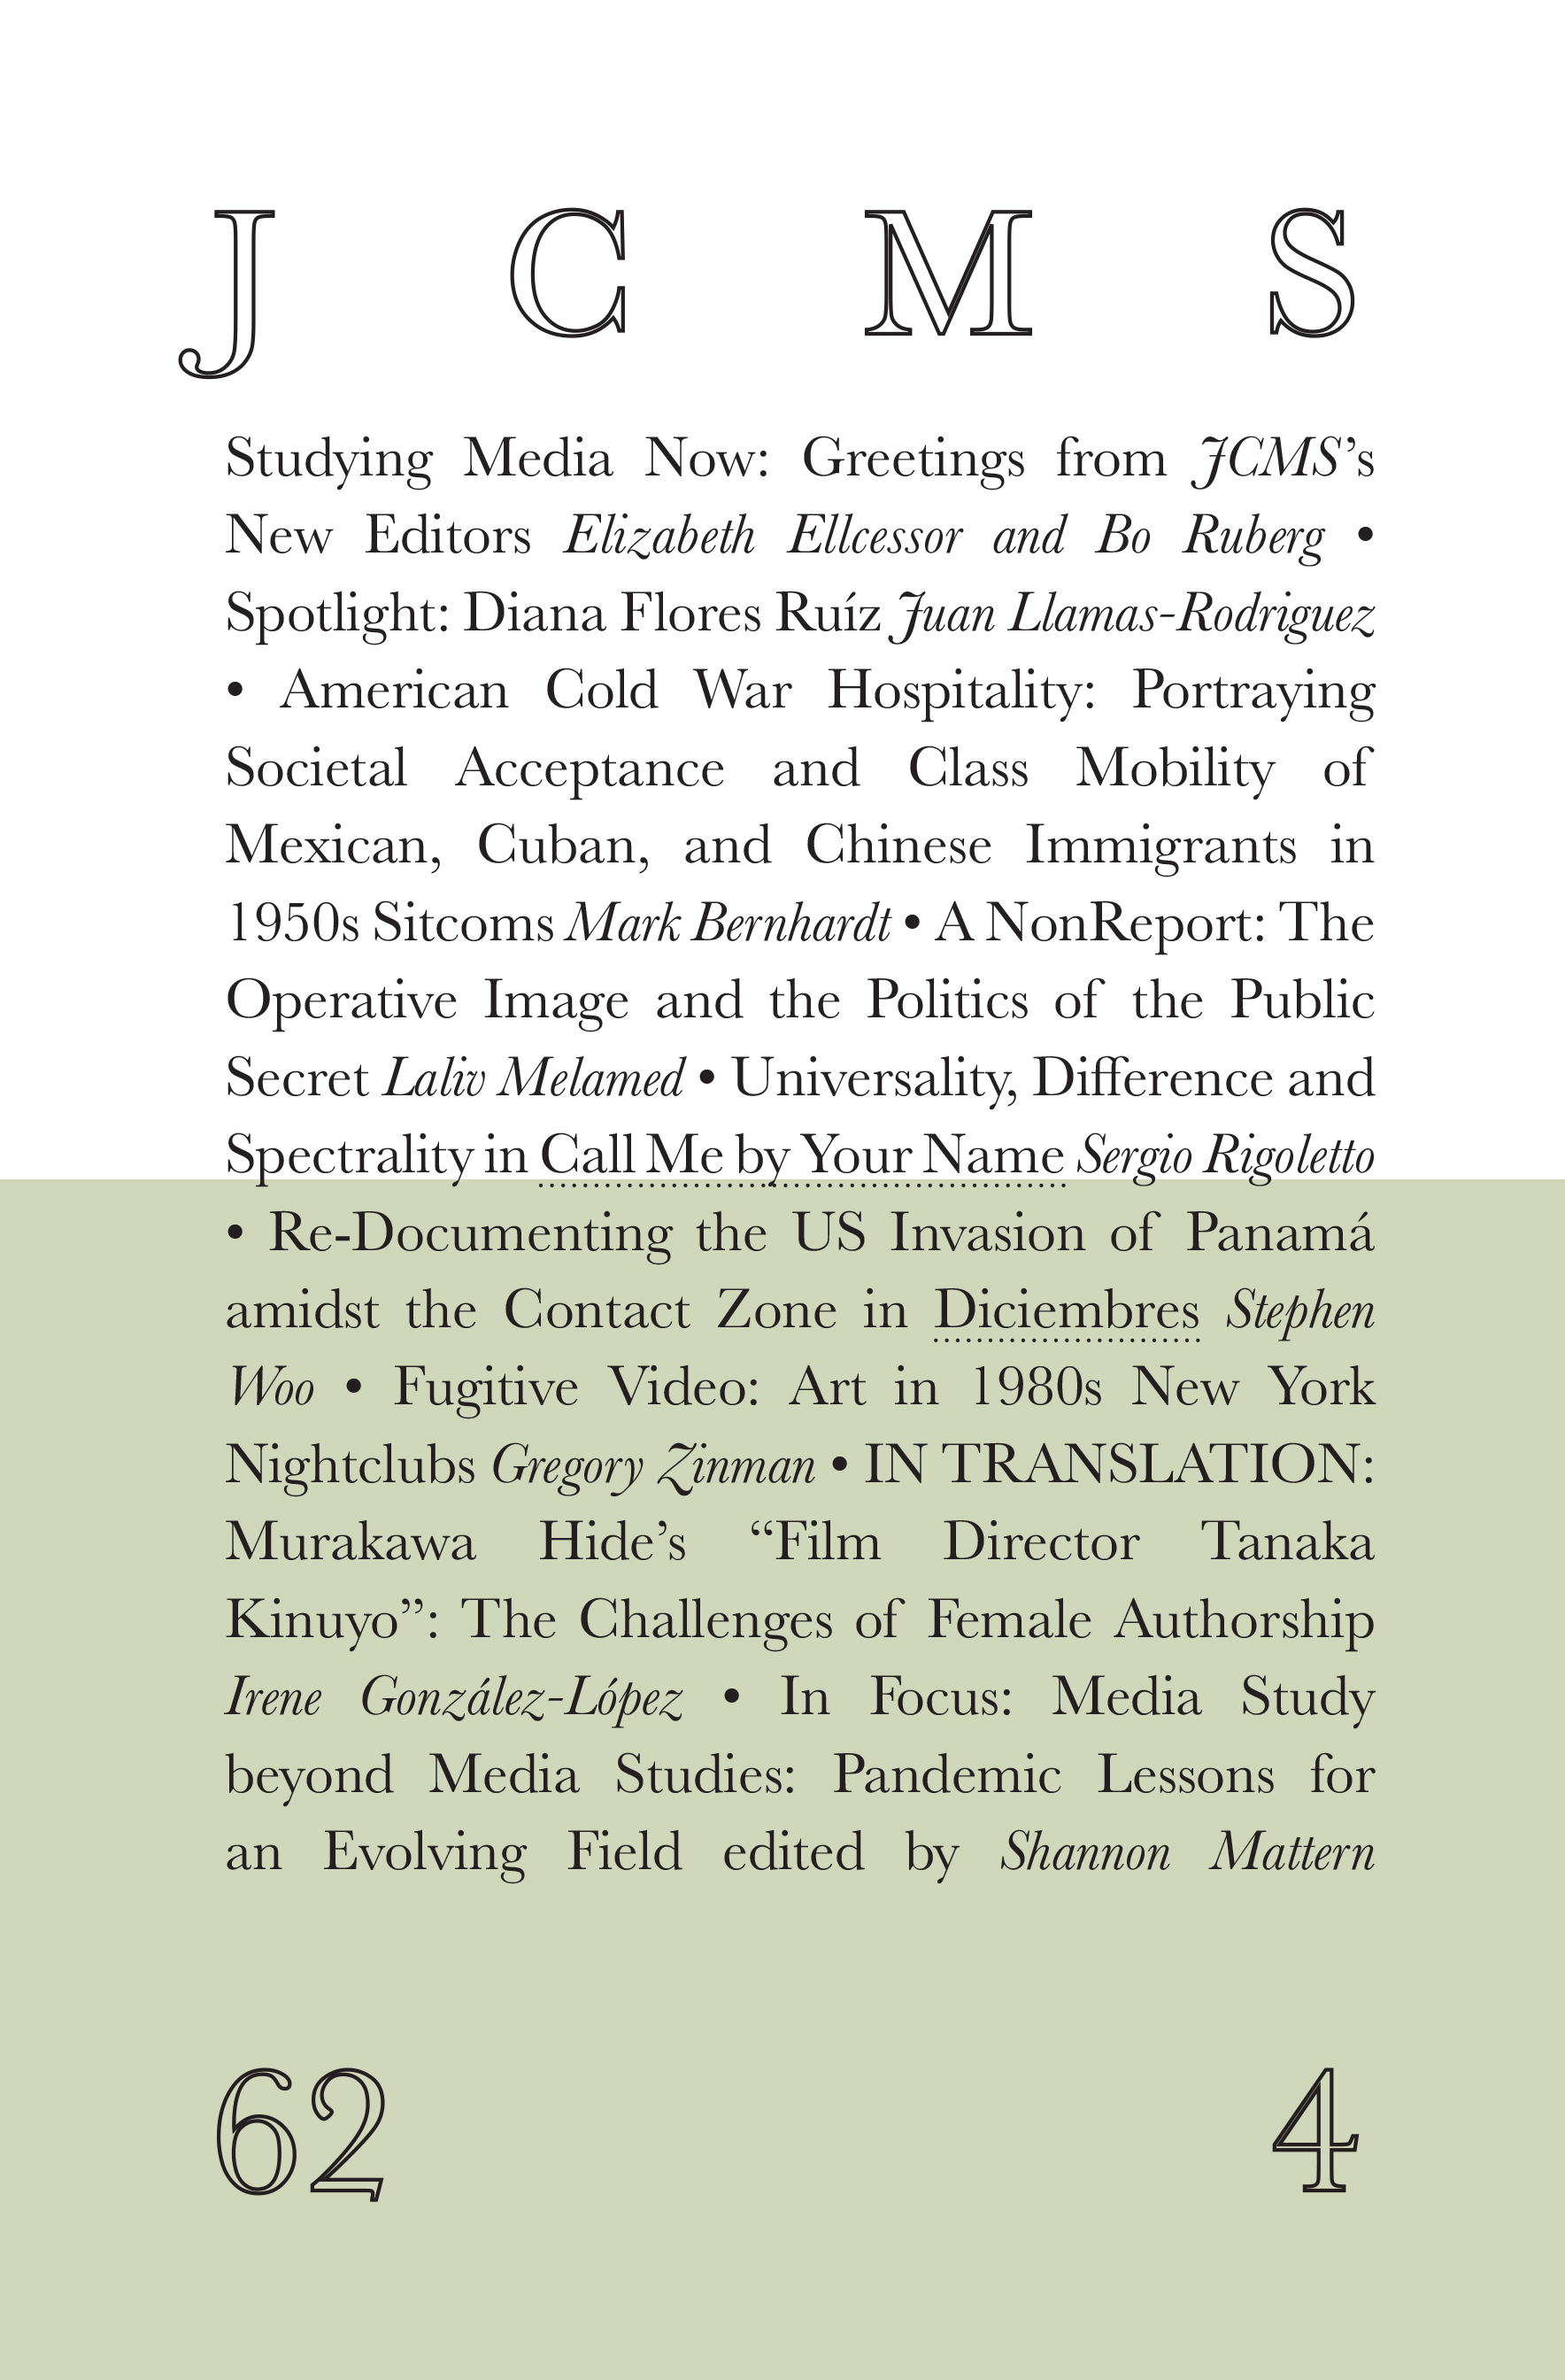 Journal of Cinema and Media Studies, vol. 62, no. 4